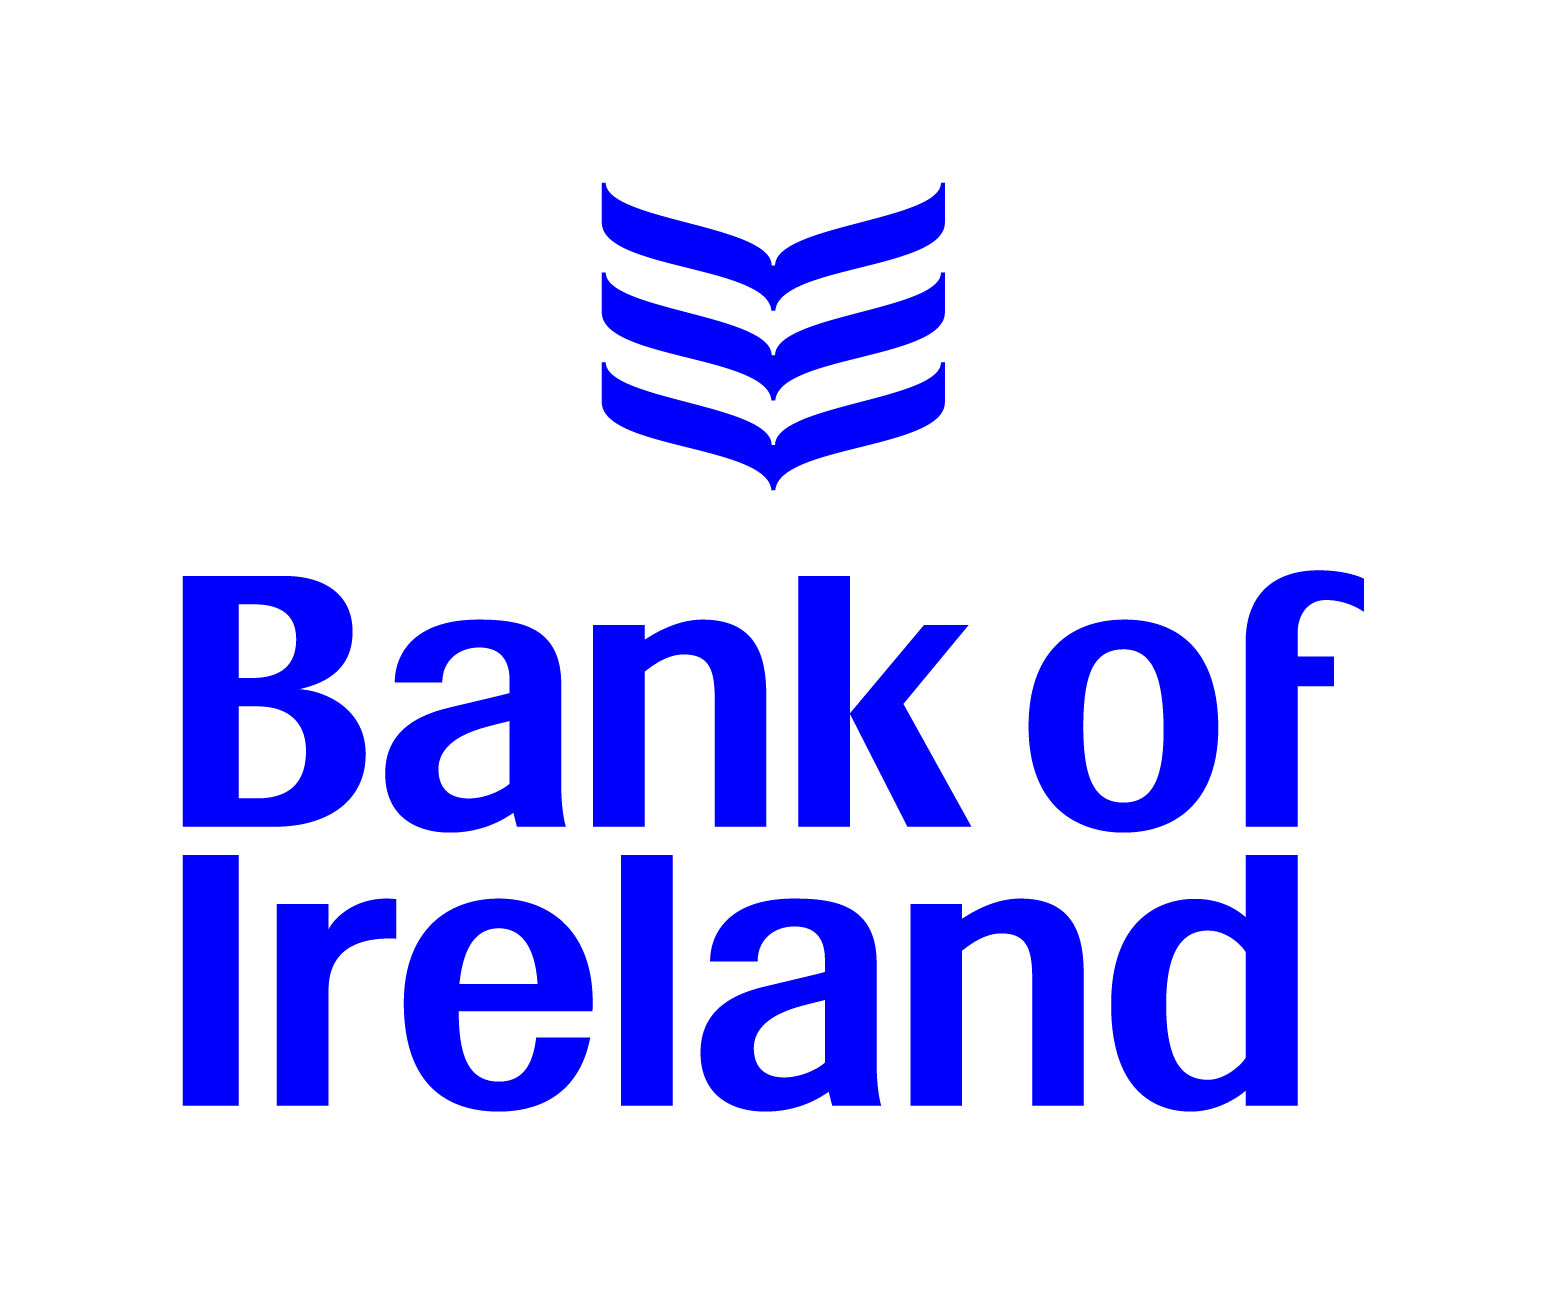 Bank of Ireland Brand Logo